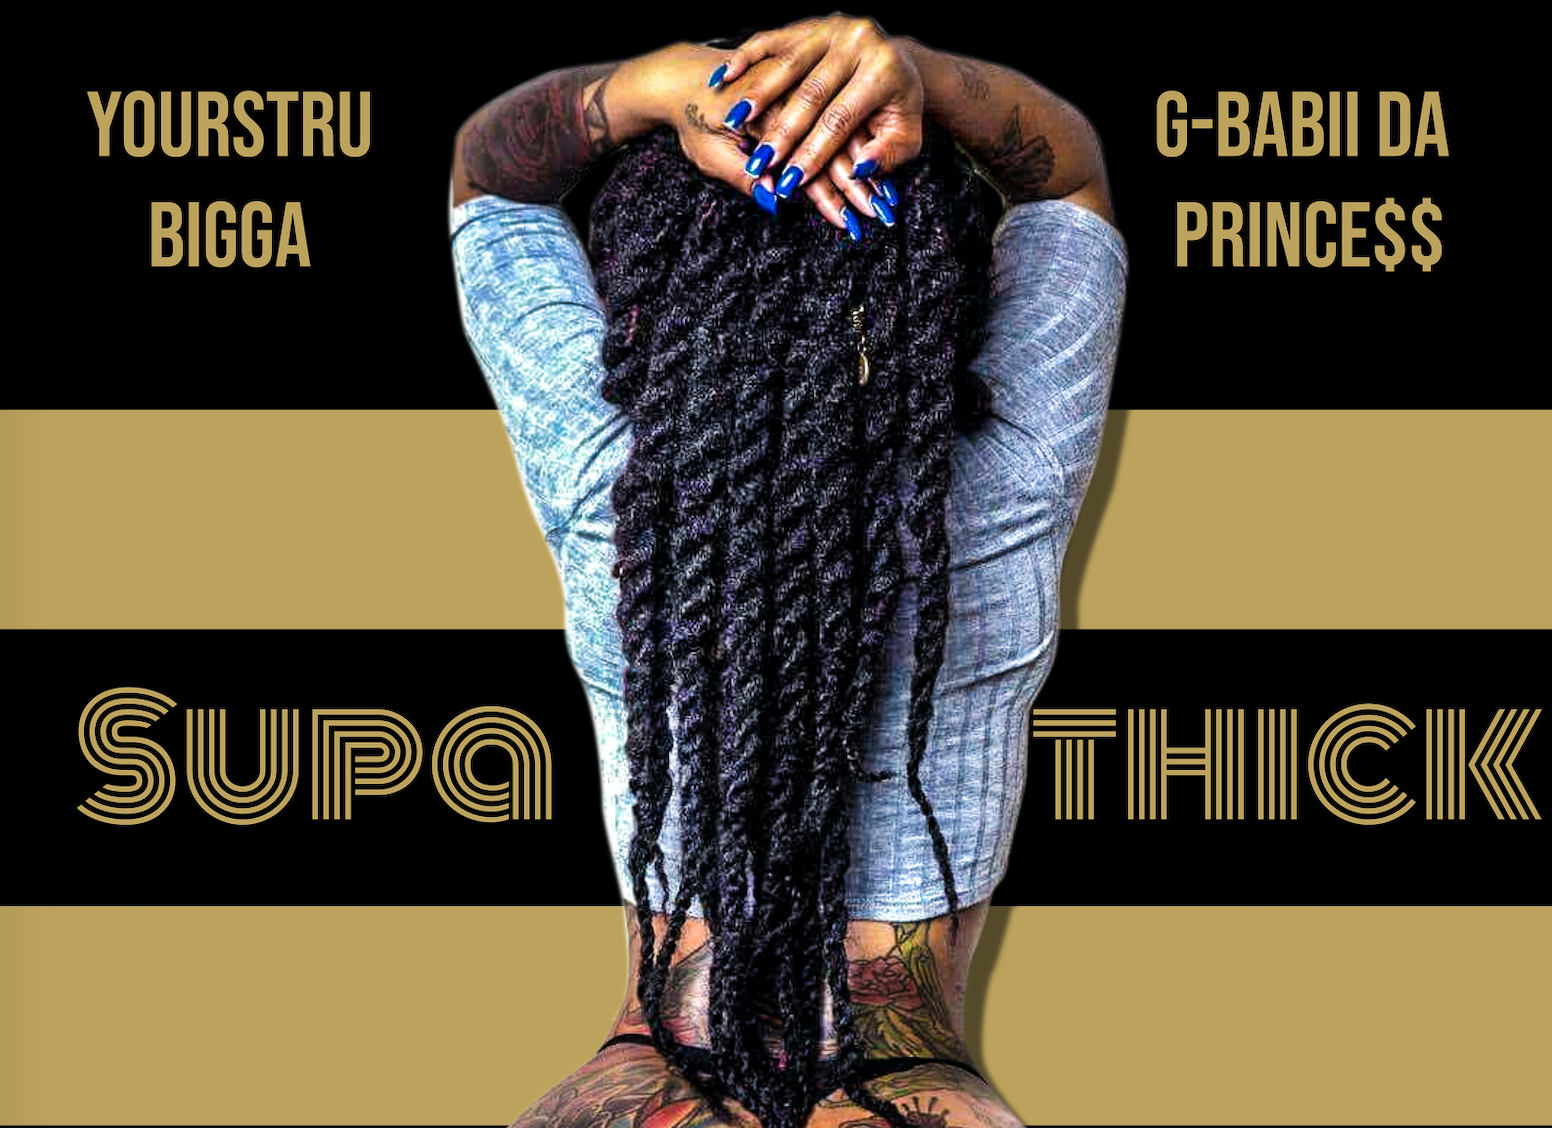 YoursTru Bigga & G-Babii Da Prince$$ Let Loose On “Supa Thick”